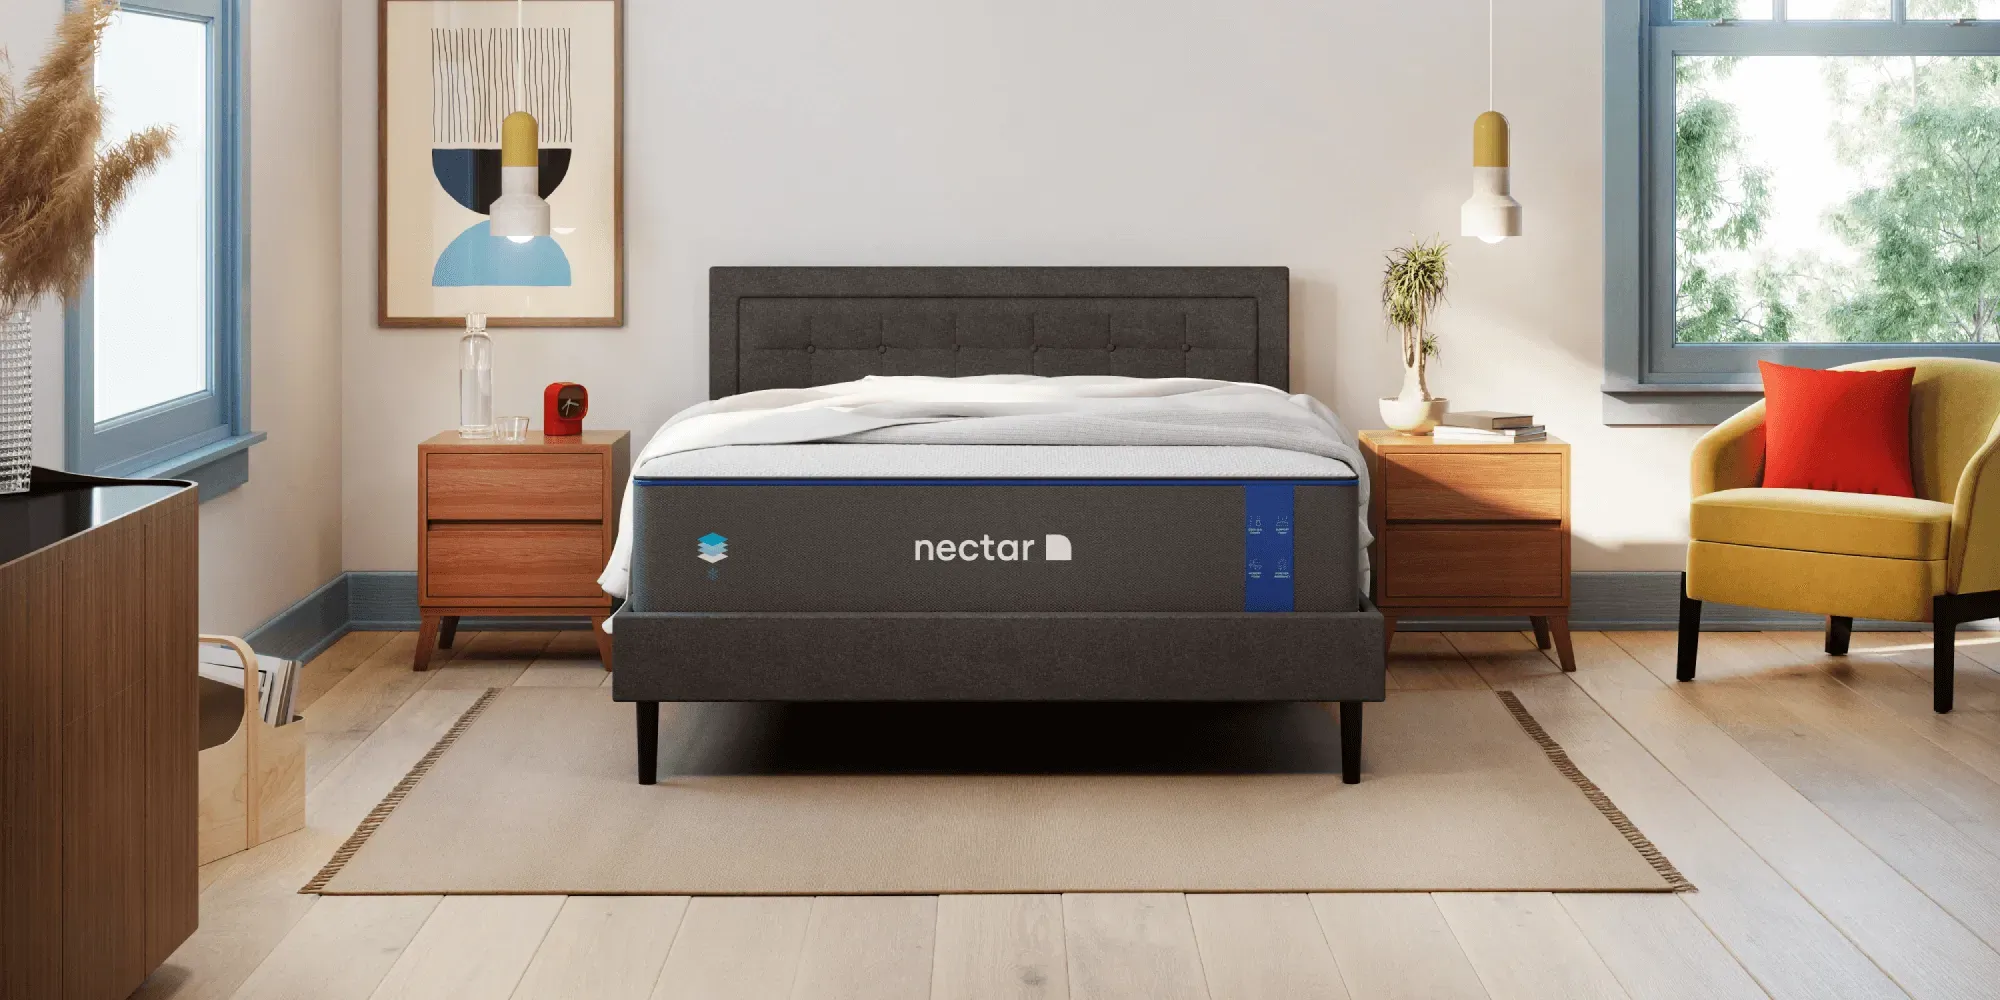 nectar mattress on bed